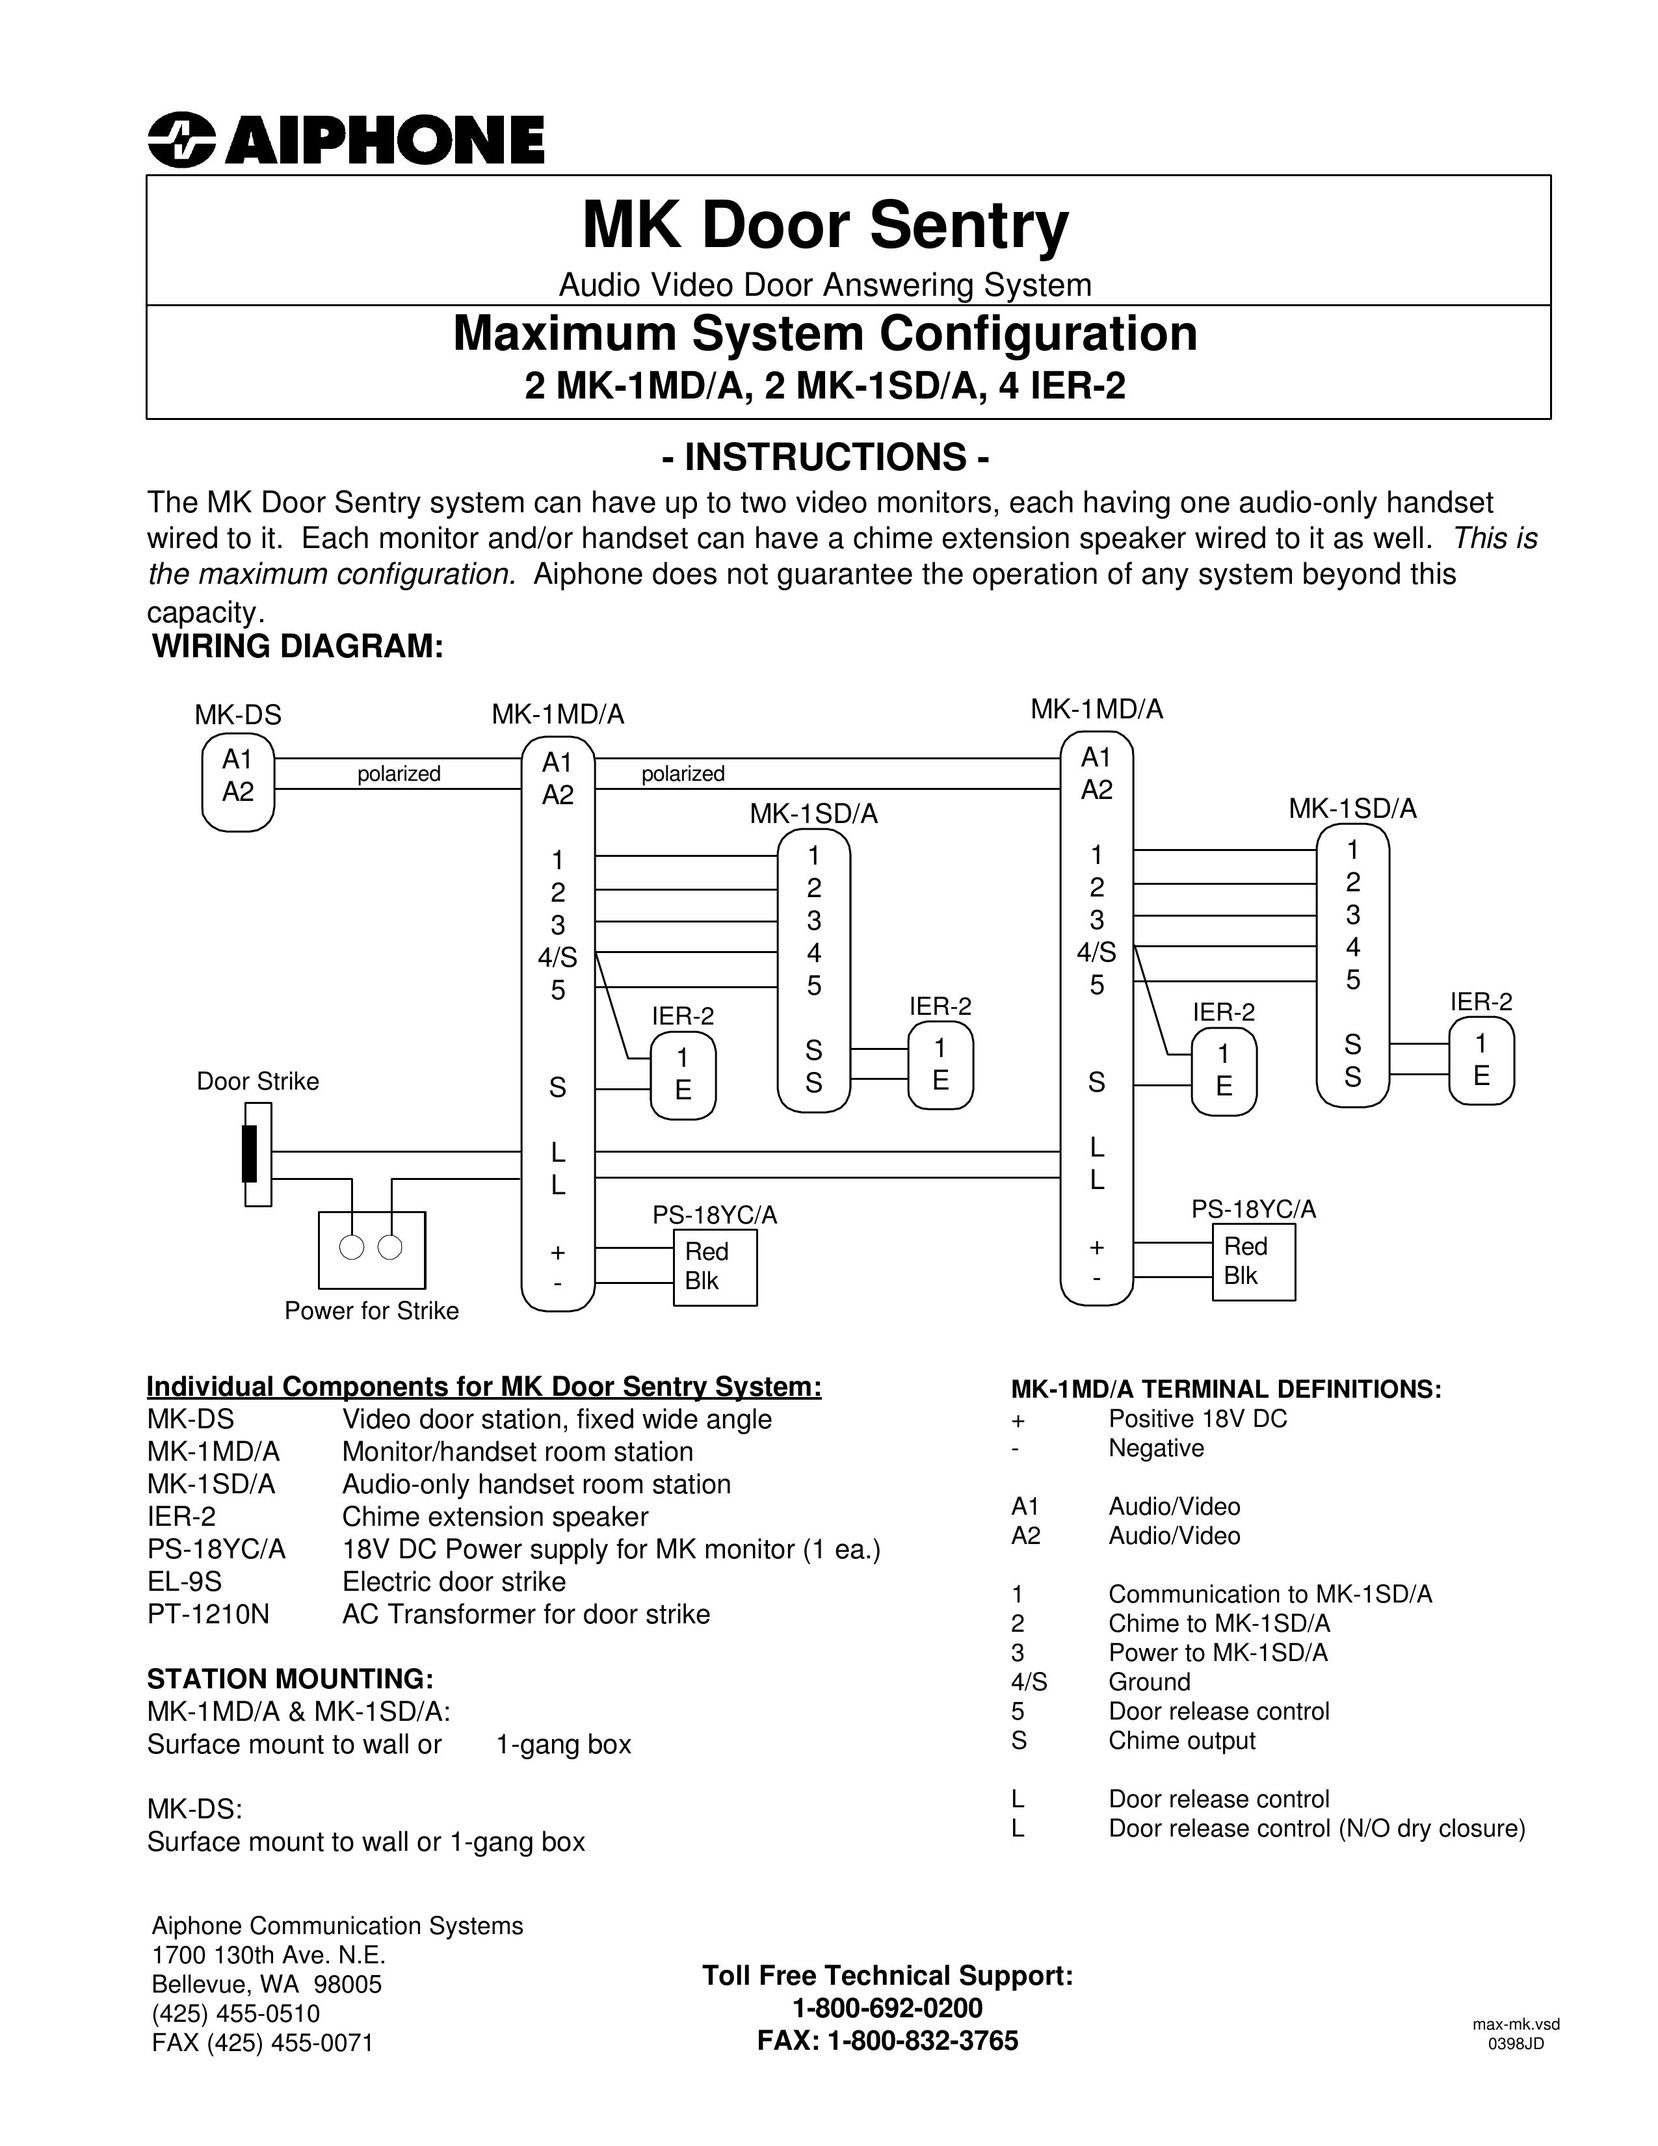 Aiphone 4 IER-2 Intercom System User Manual